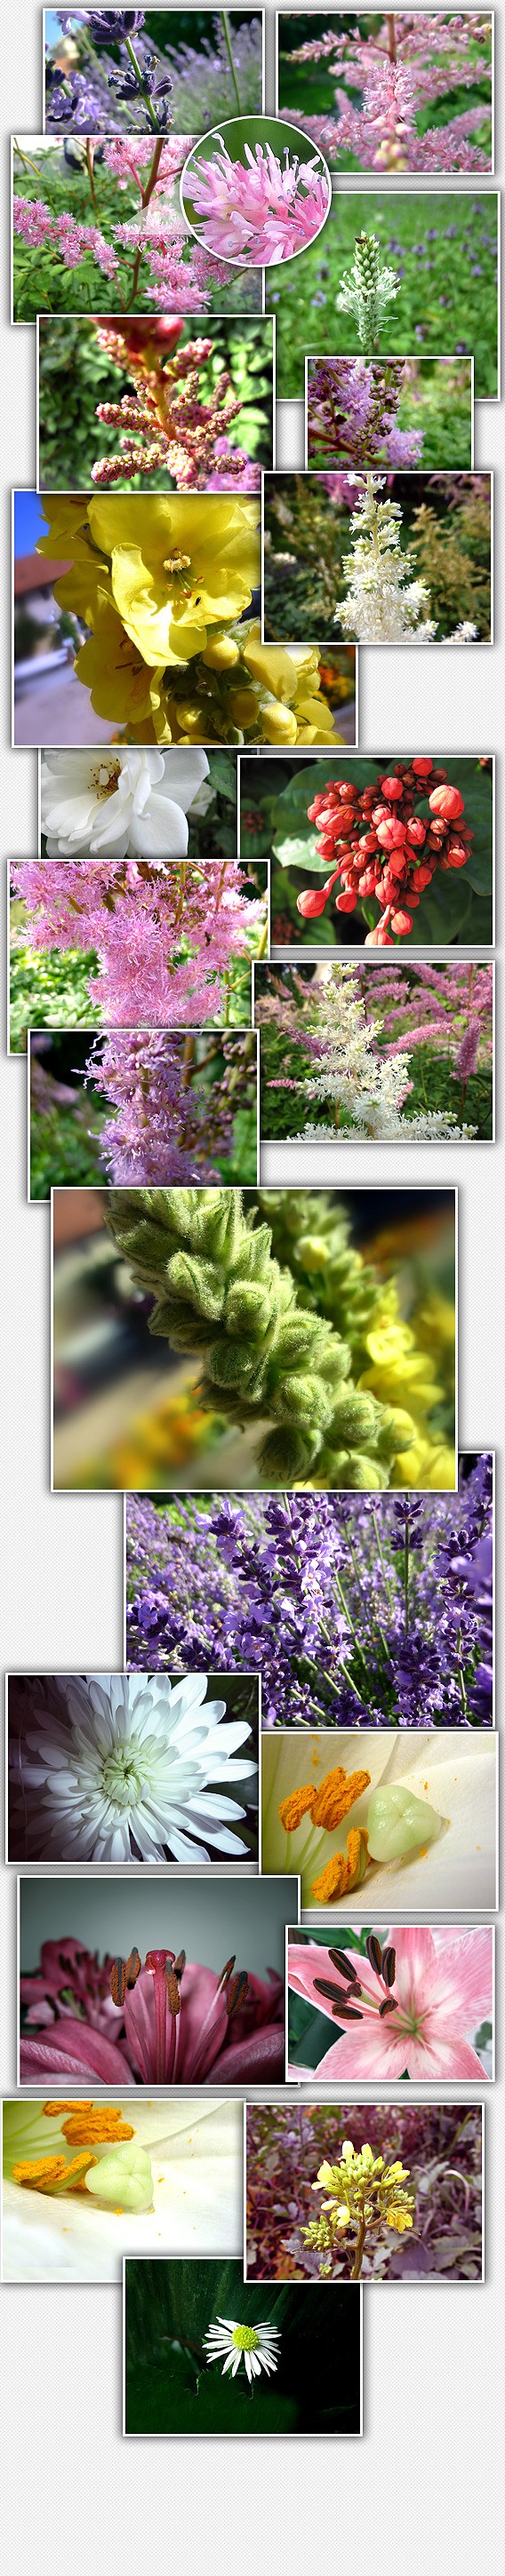 Download 23 High Resolution Professional Flower Stock Photos - Premium Downloads Lorelei Web Design